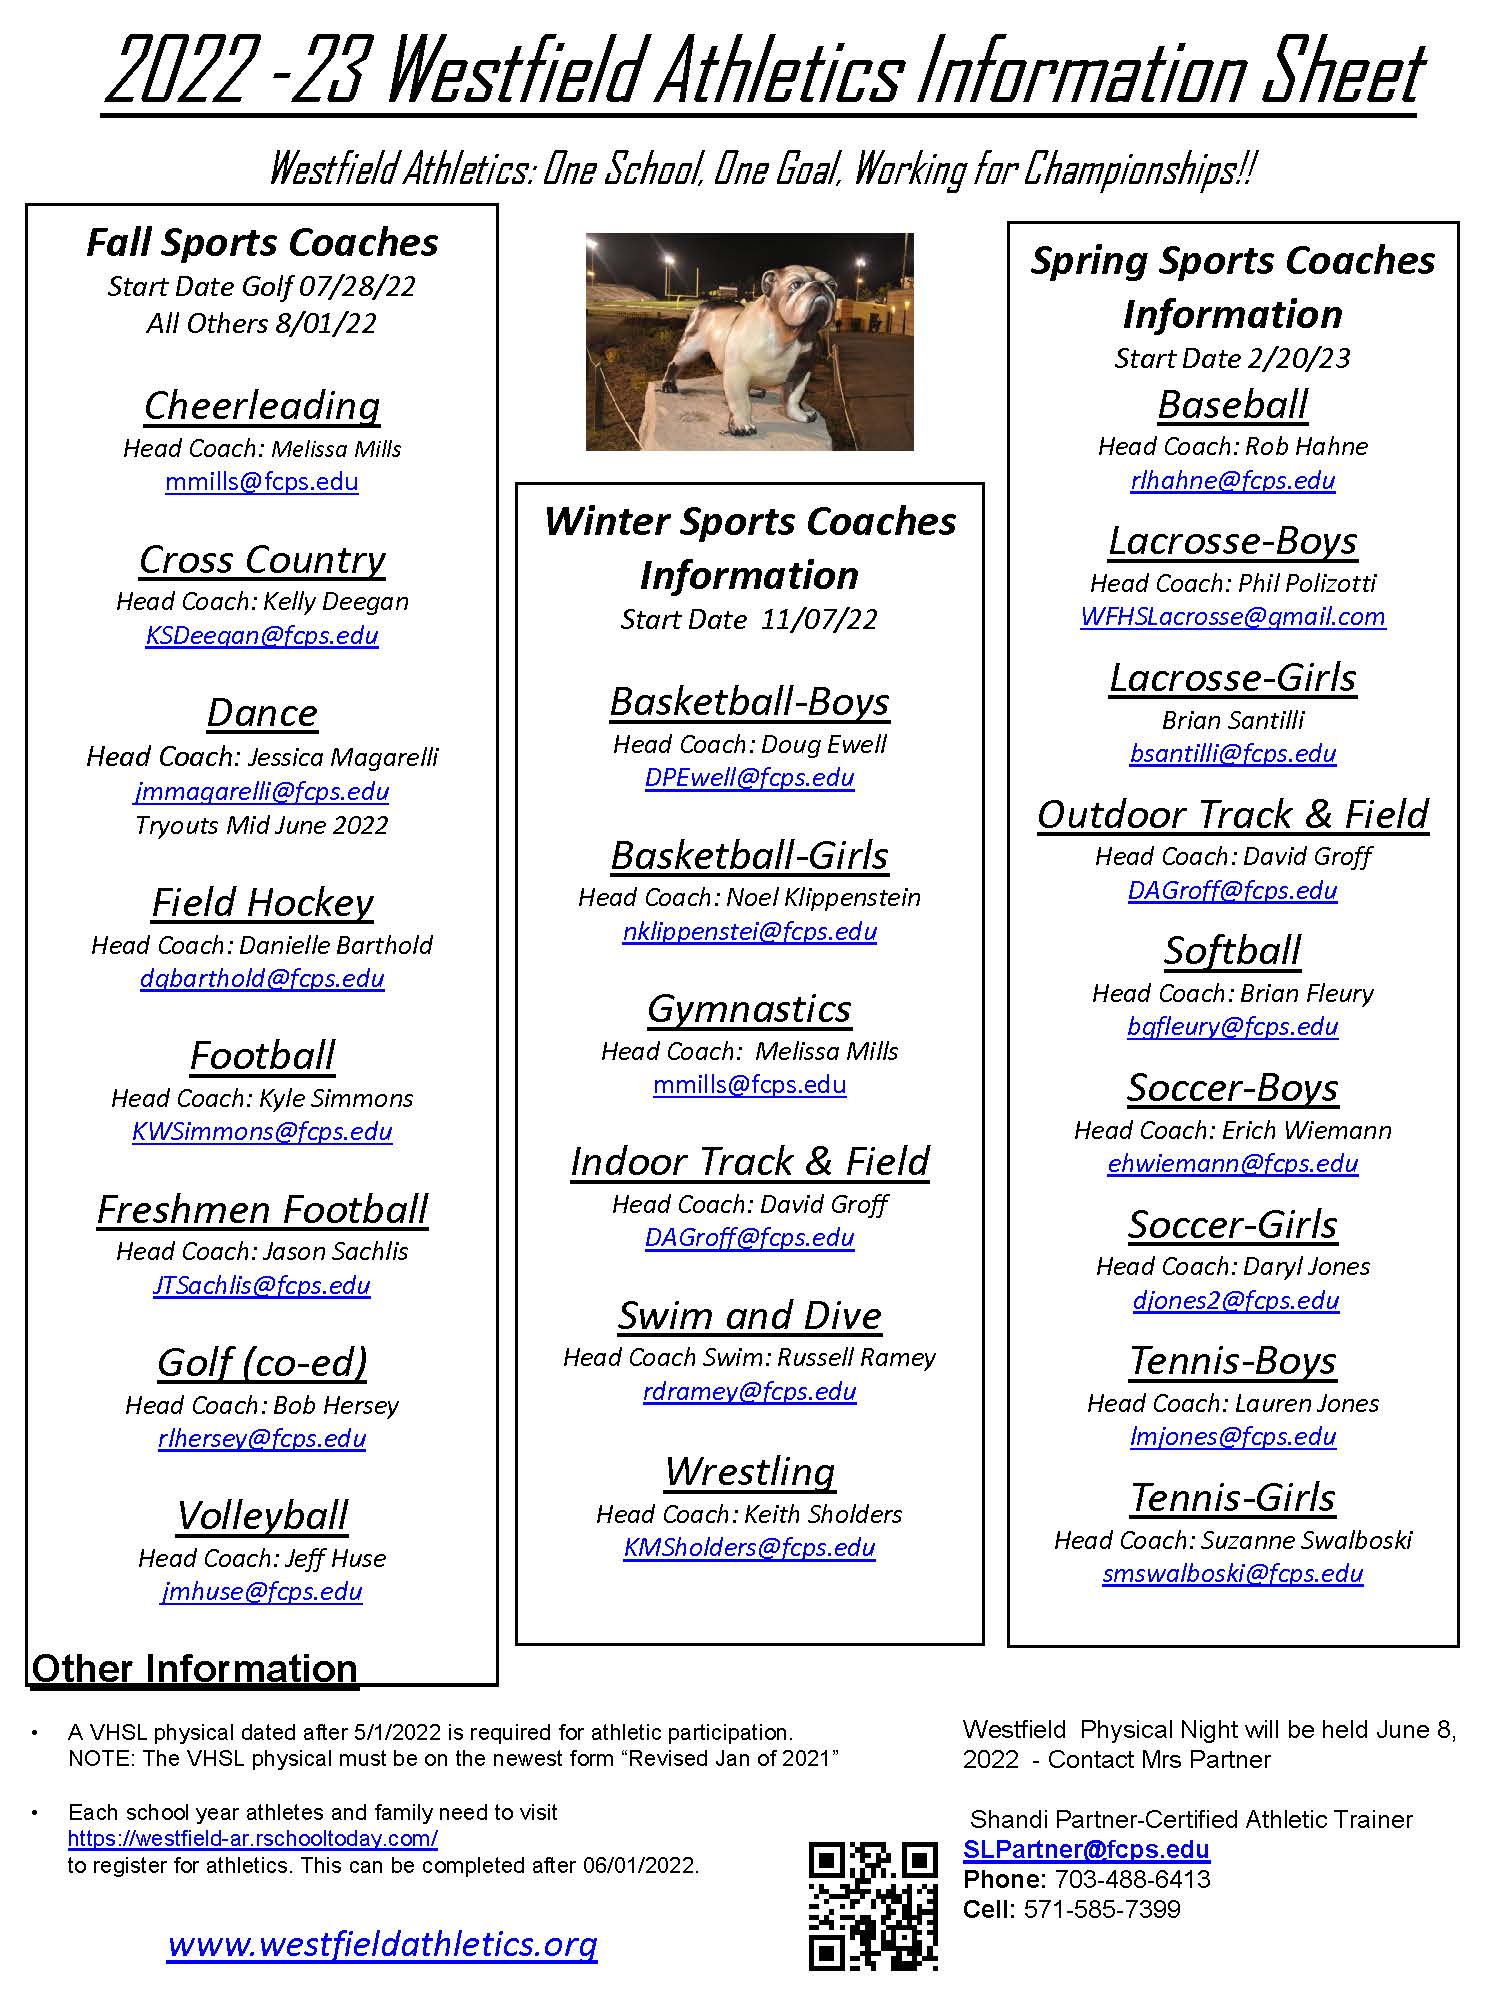 westfield athletics info sheet